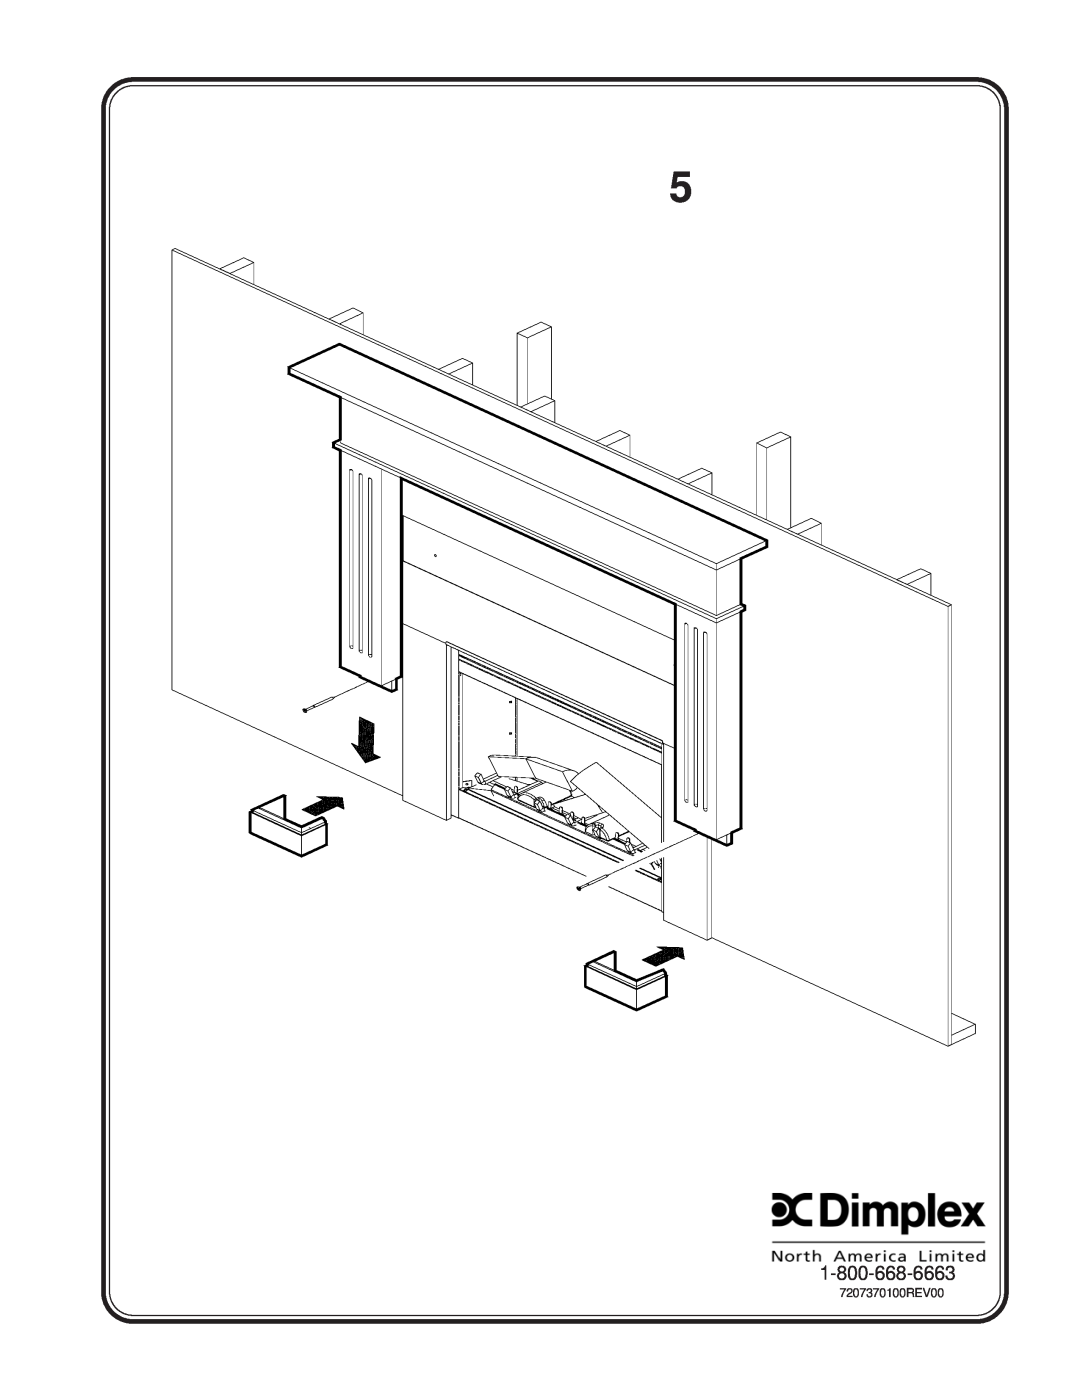 Dimplex Indoor Fireplace manual 7207370100REV00 